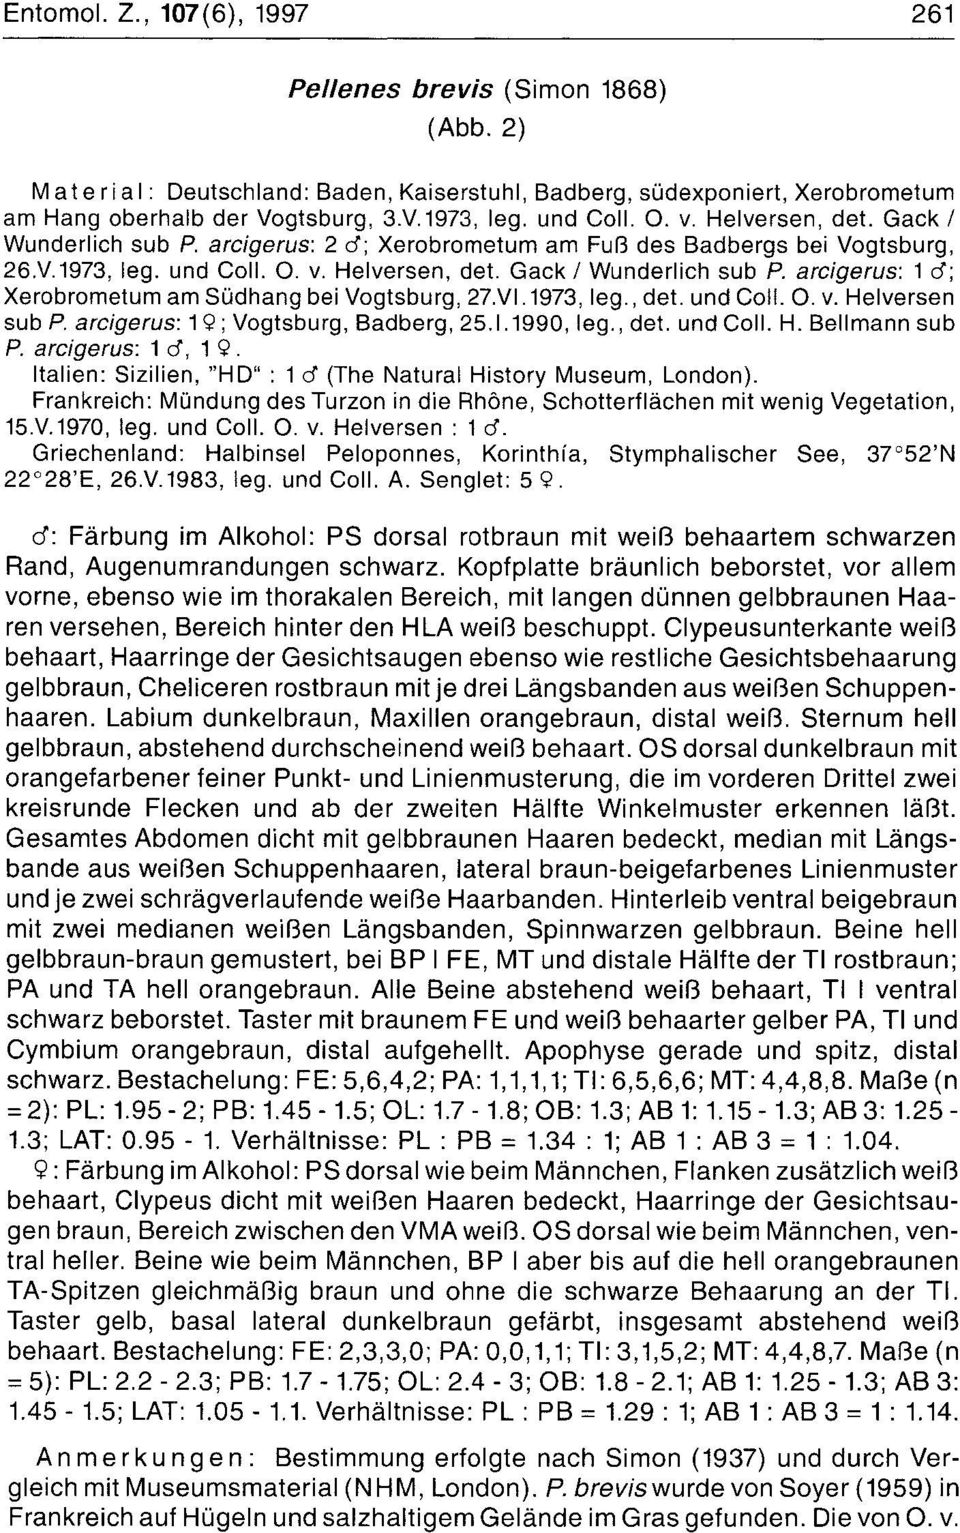 v1.1973, leg., det. und Coll. O. v. Helversen sub P. arcigerus: 1 Q; Vogtsburg, Badberg, 25.1.1990, leg., det. und Coll. H. Bellmann sub P. arcigerus: 1 0, 1 Q.